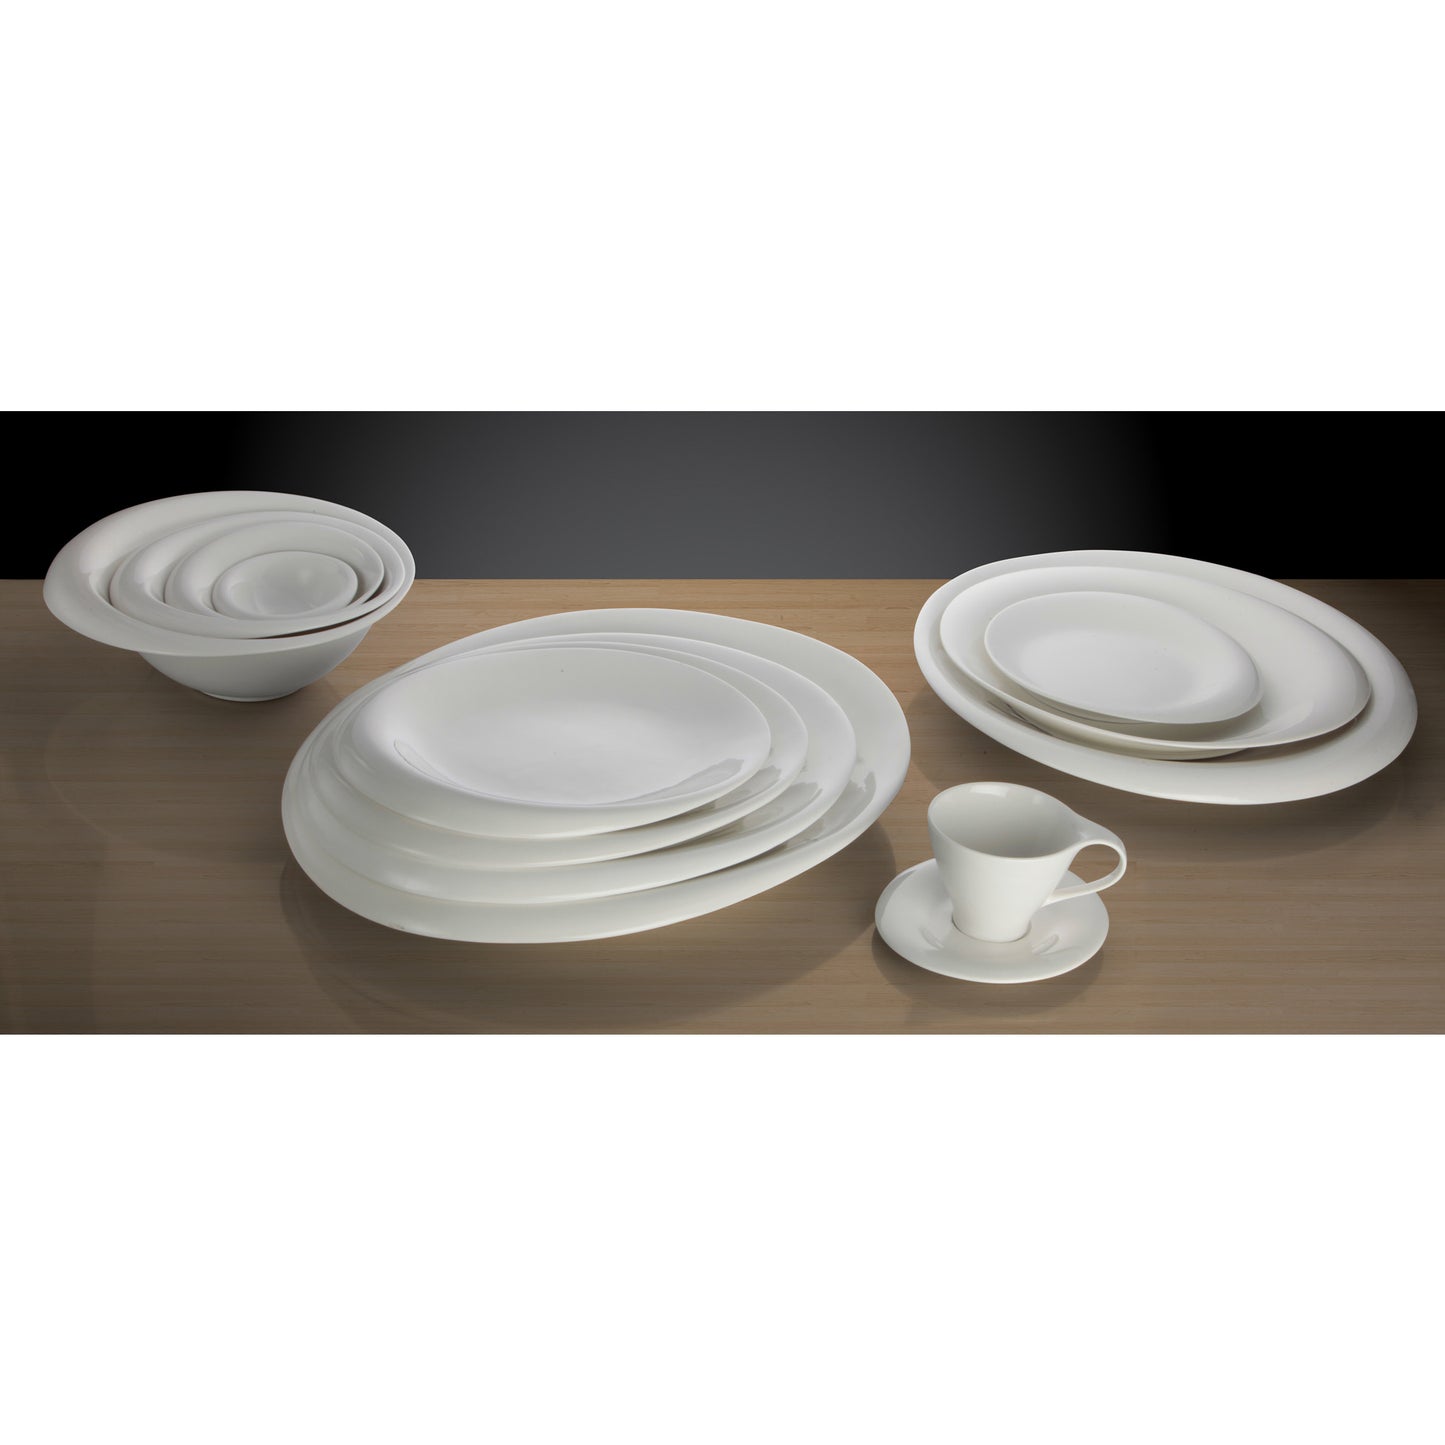 WDP004-213 - 18" x 13-5/8" Porcelain Oval Bowl, Creamy White, 6 pcs/case